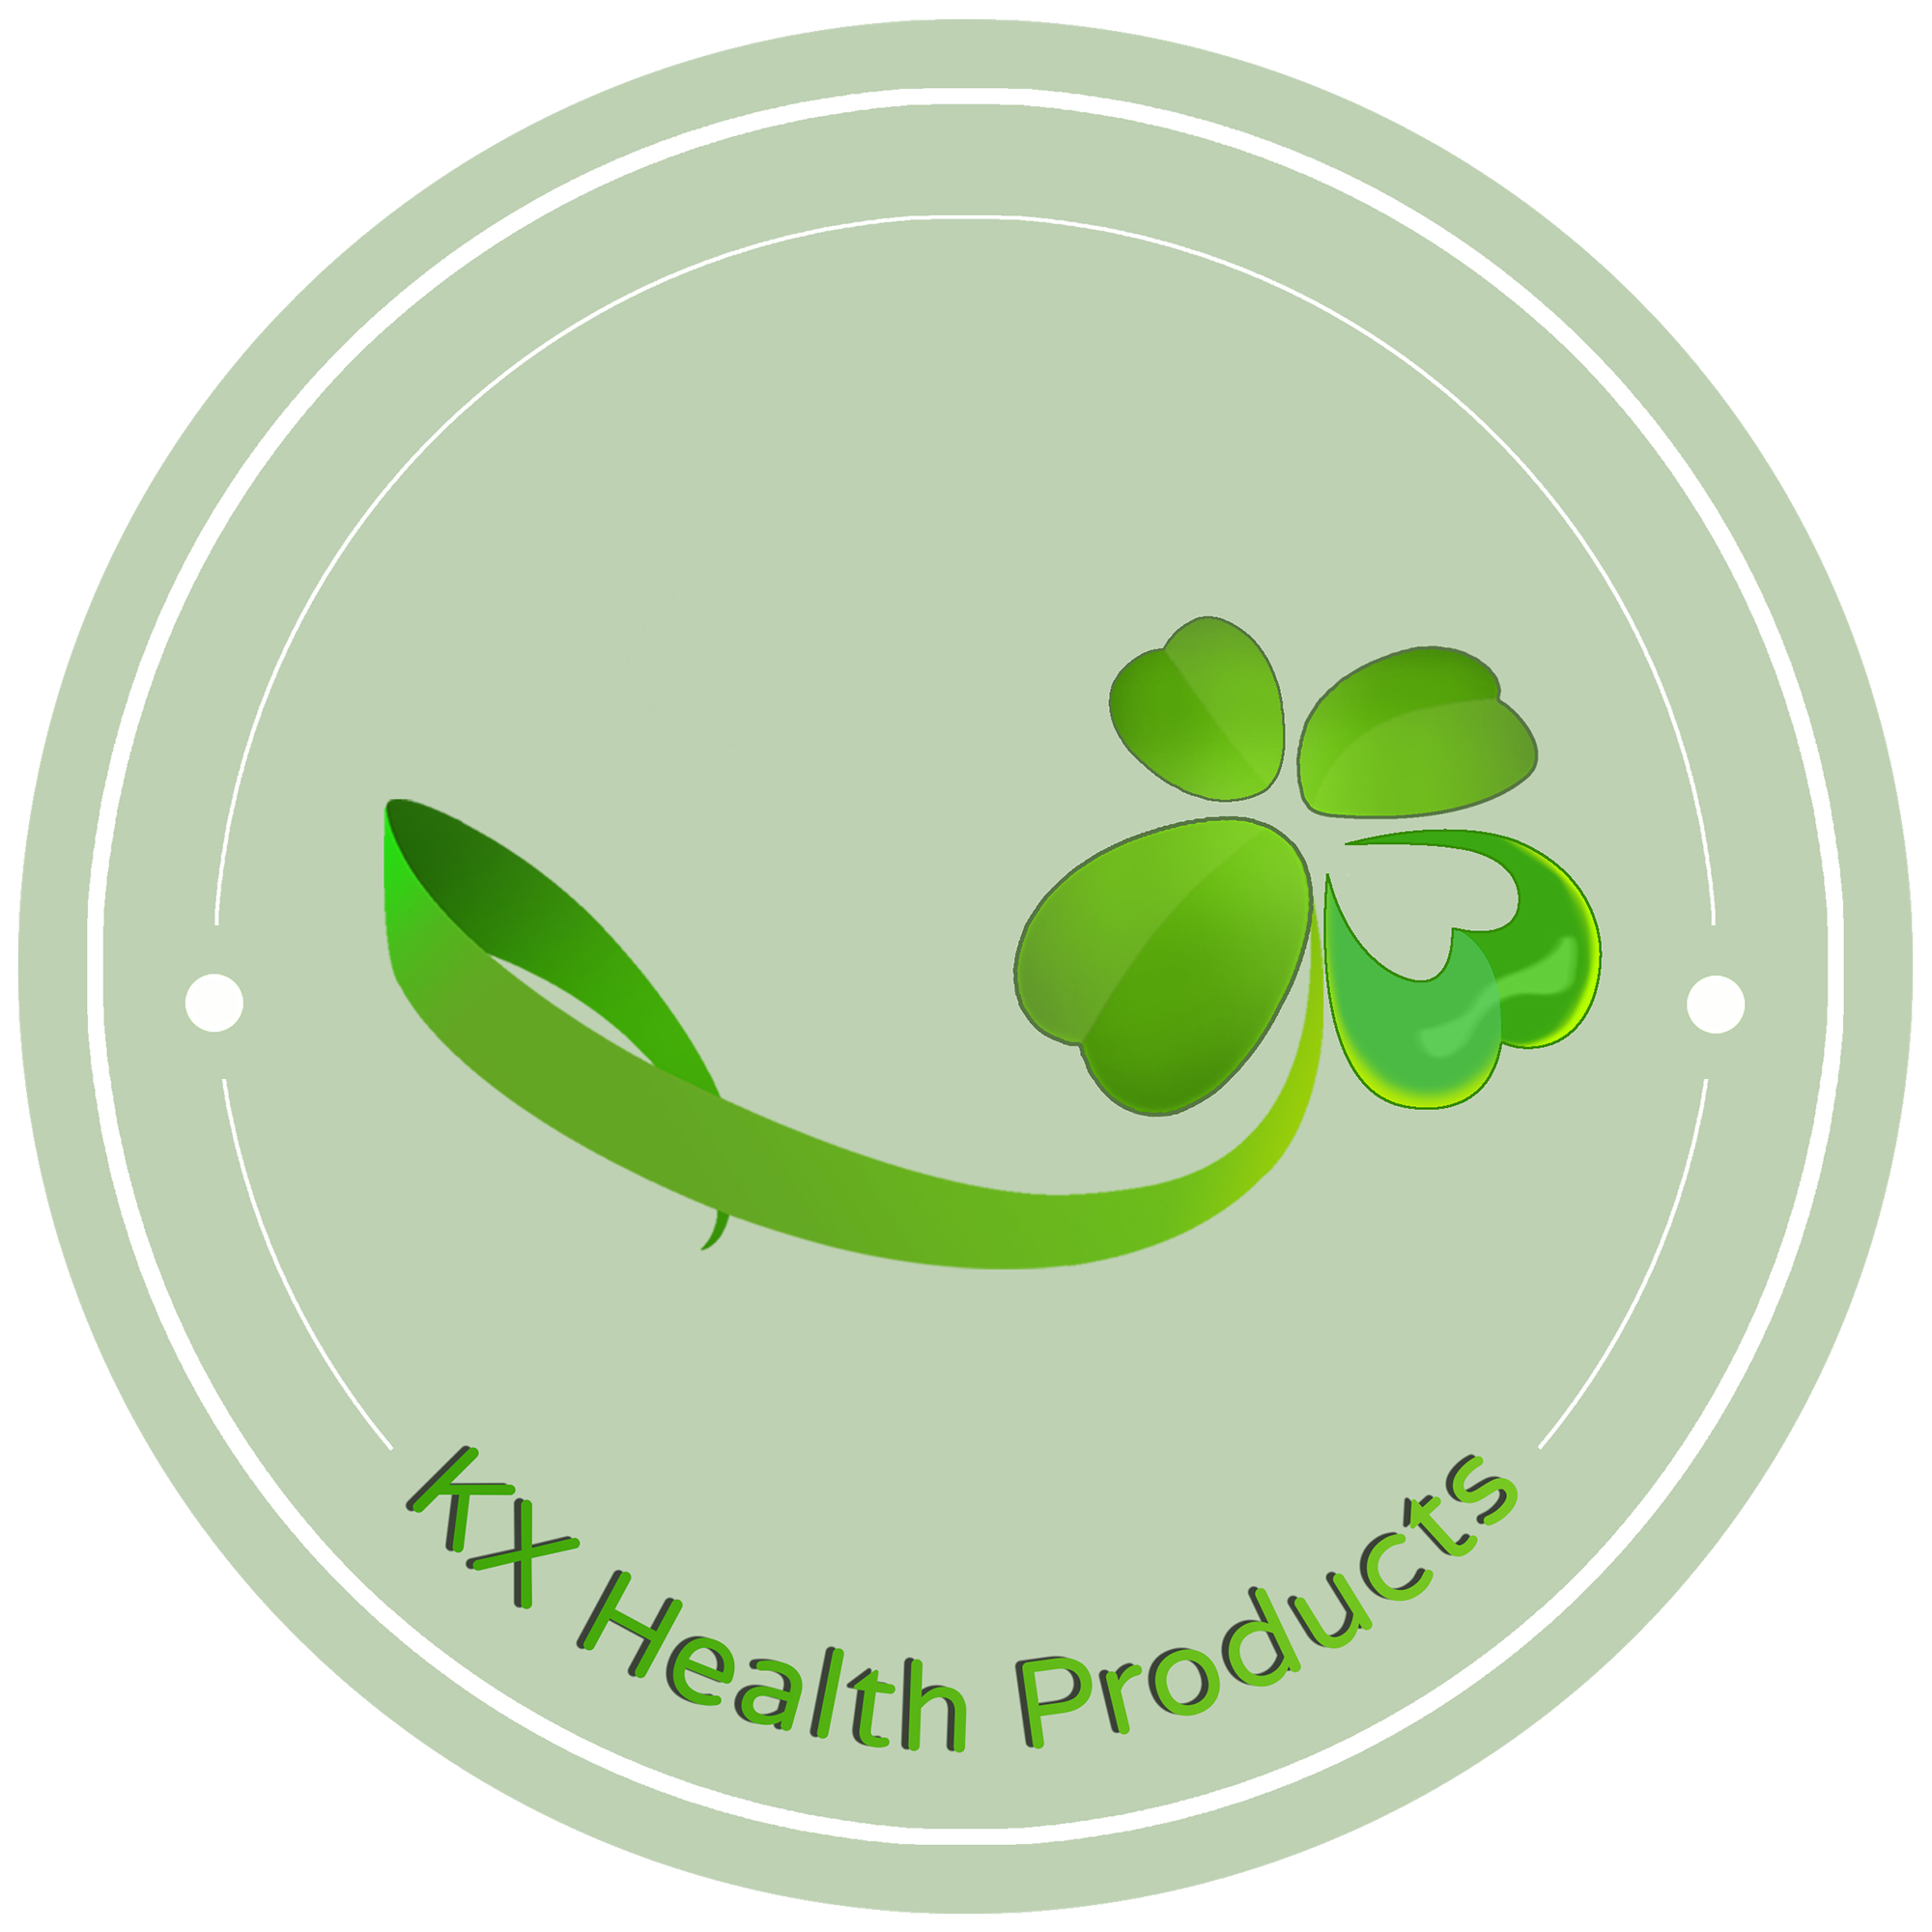 KX Health Products logo